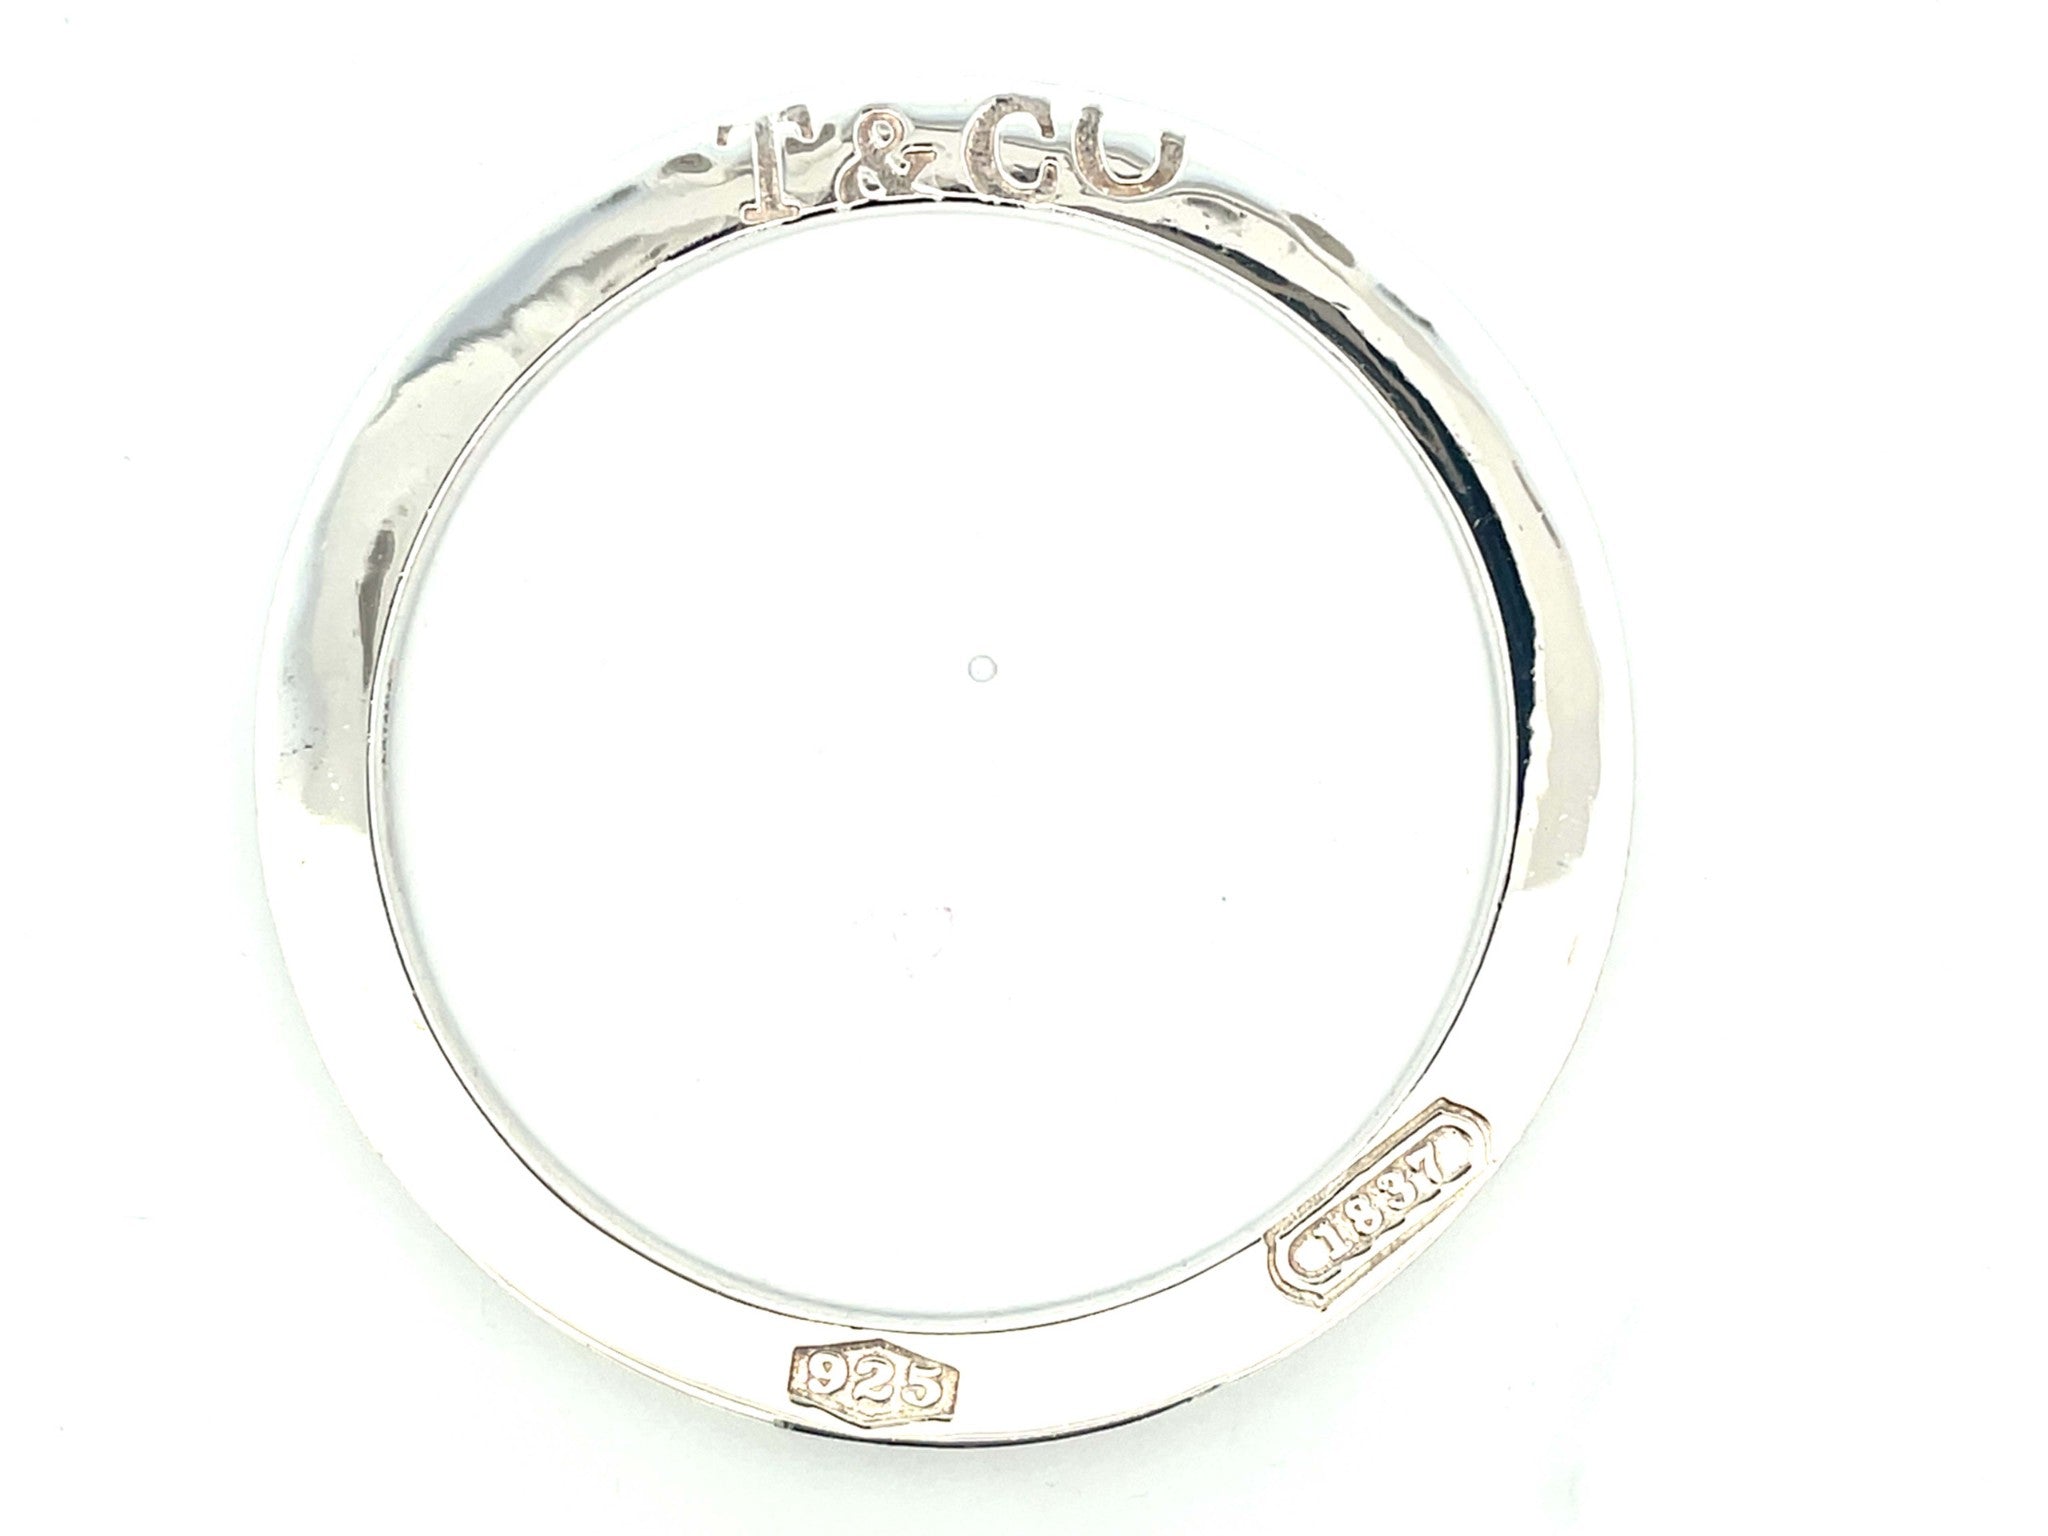 2005 Tiffany & Co. Key Ring in Sterling Silver